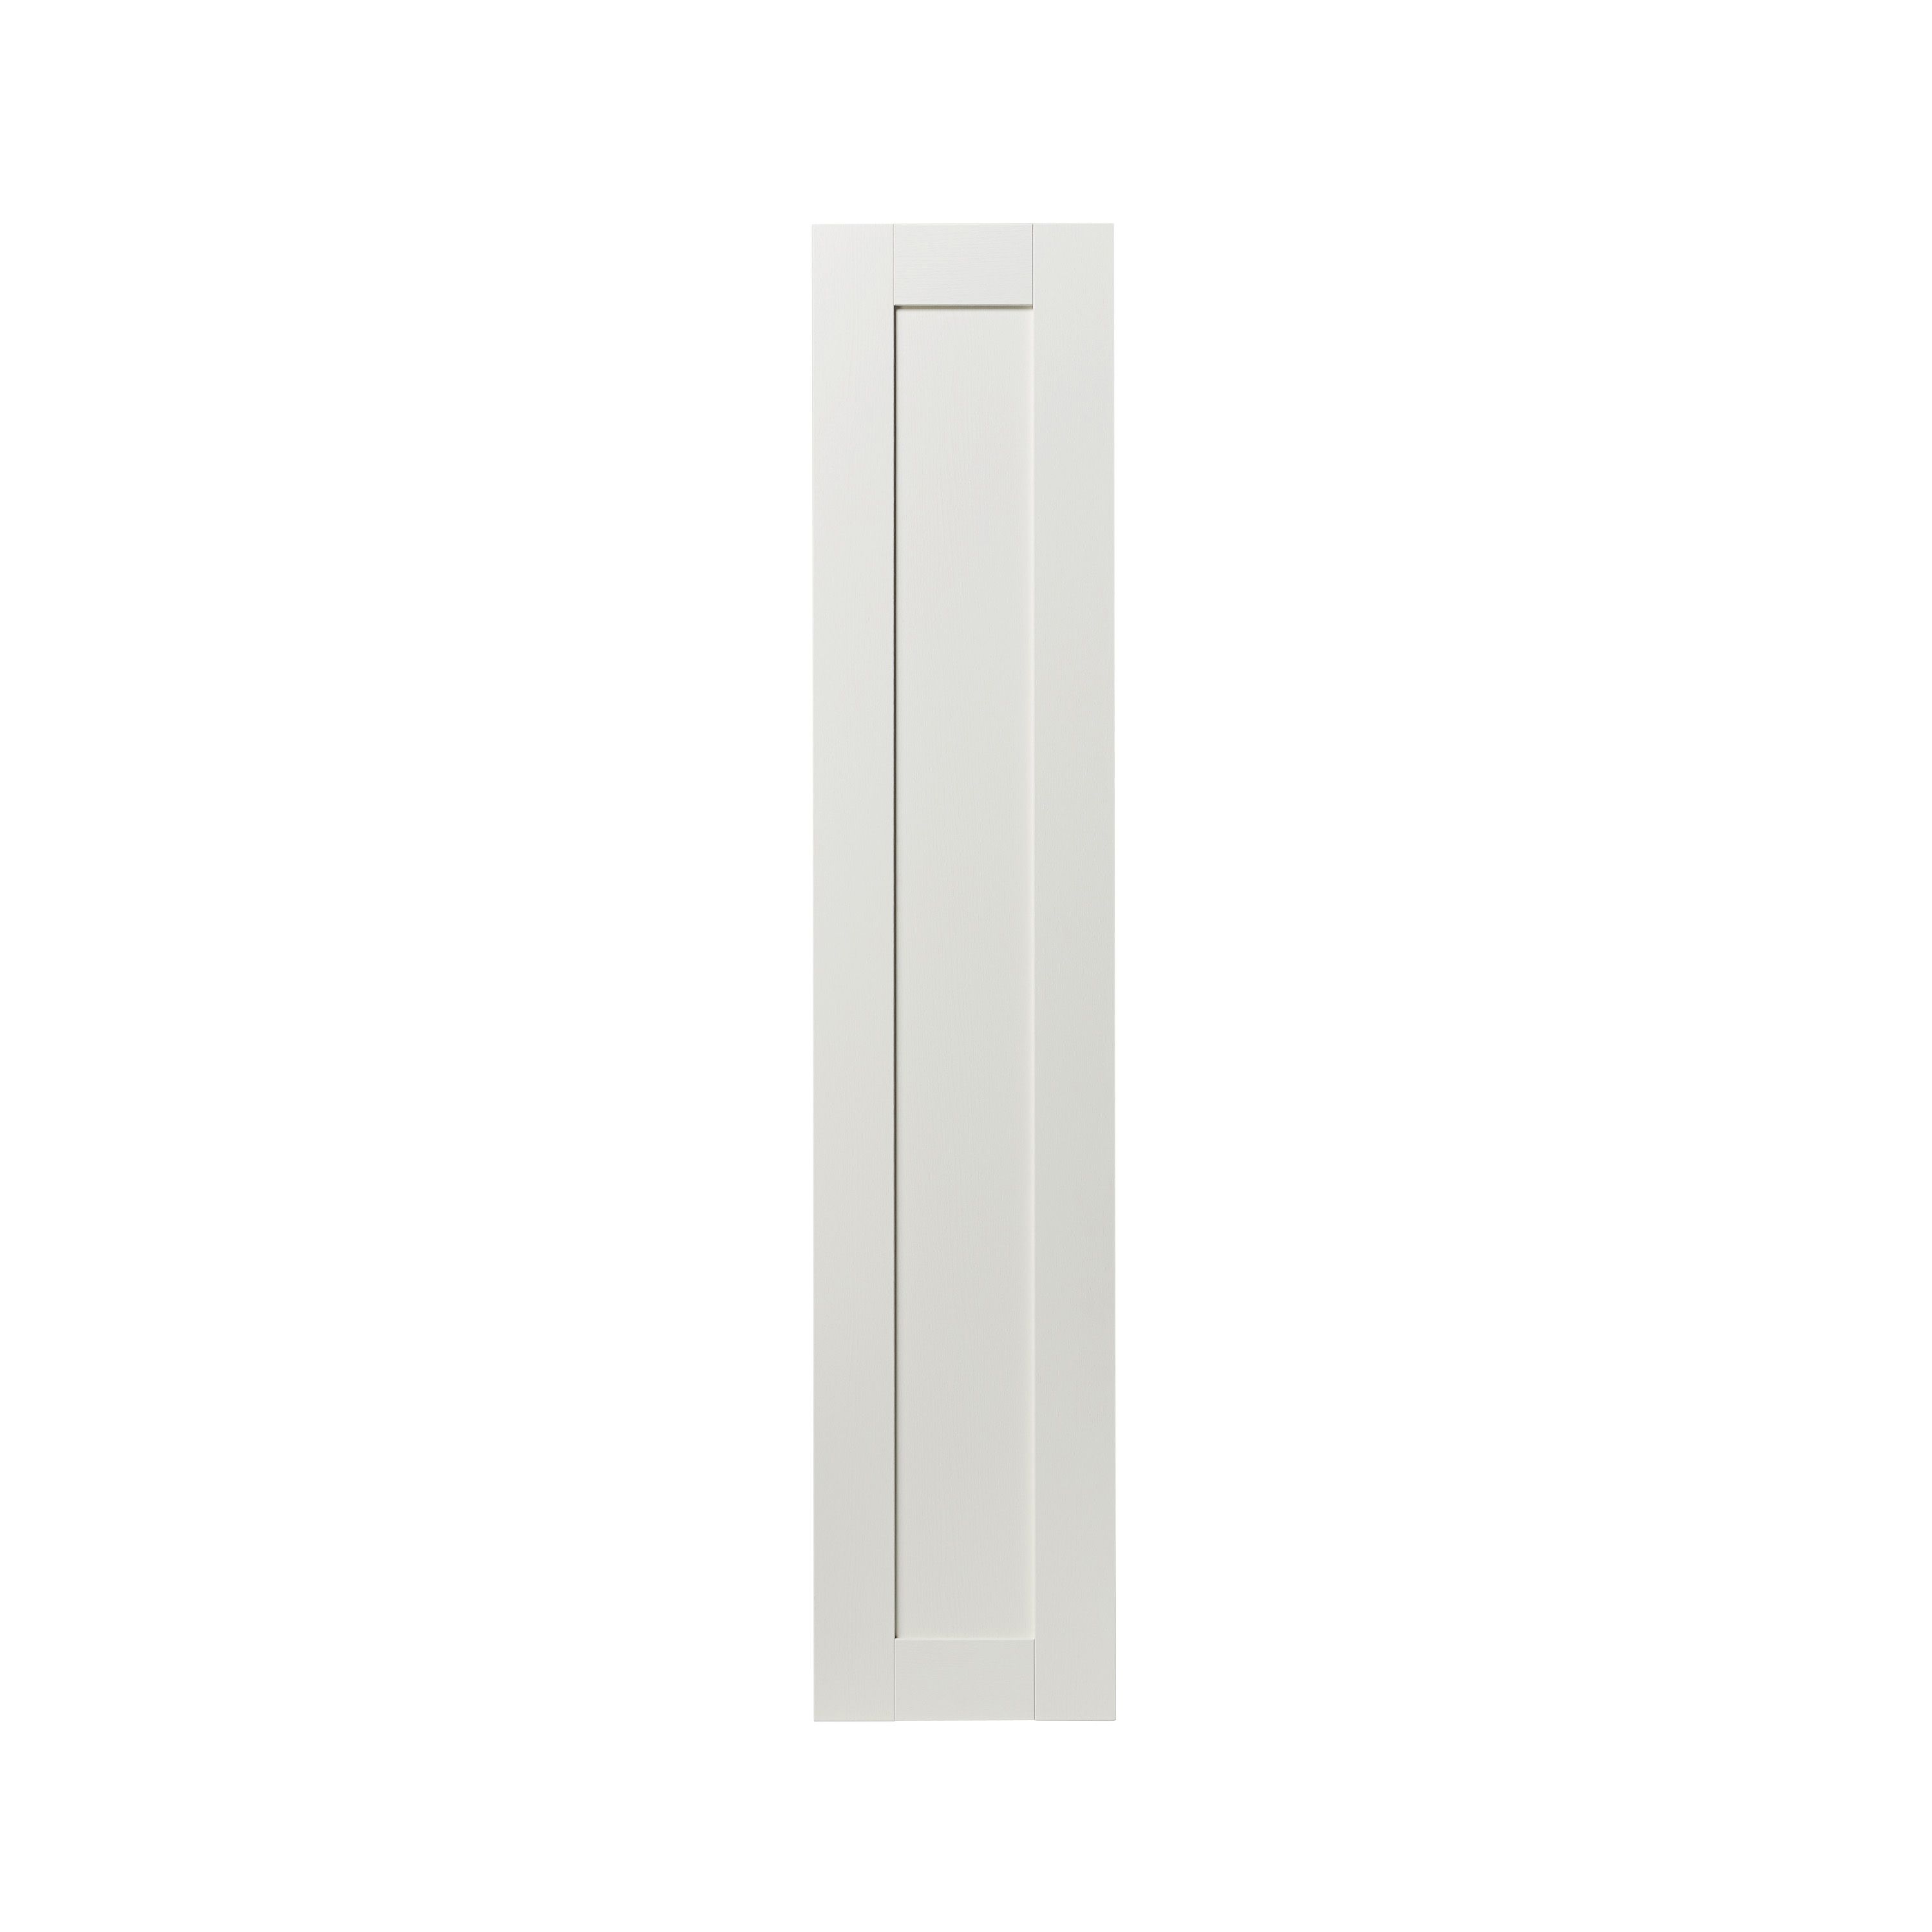 GoodHome Alpinia Matt ivory painted wood effect shaker Tall larder Cabinet door (W)300mm (H)1467mm (T)18mm